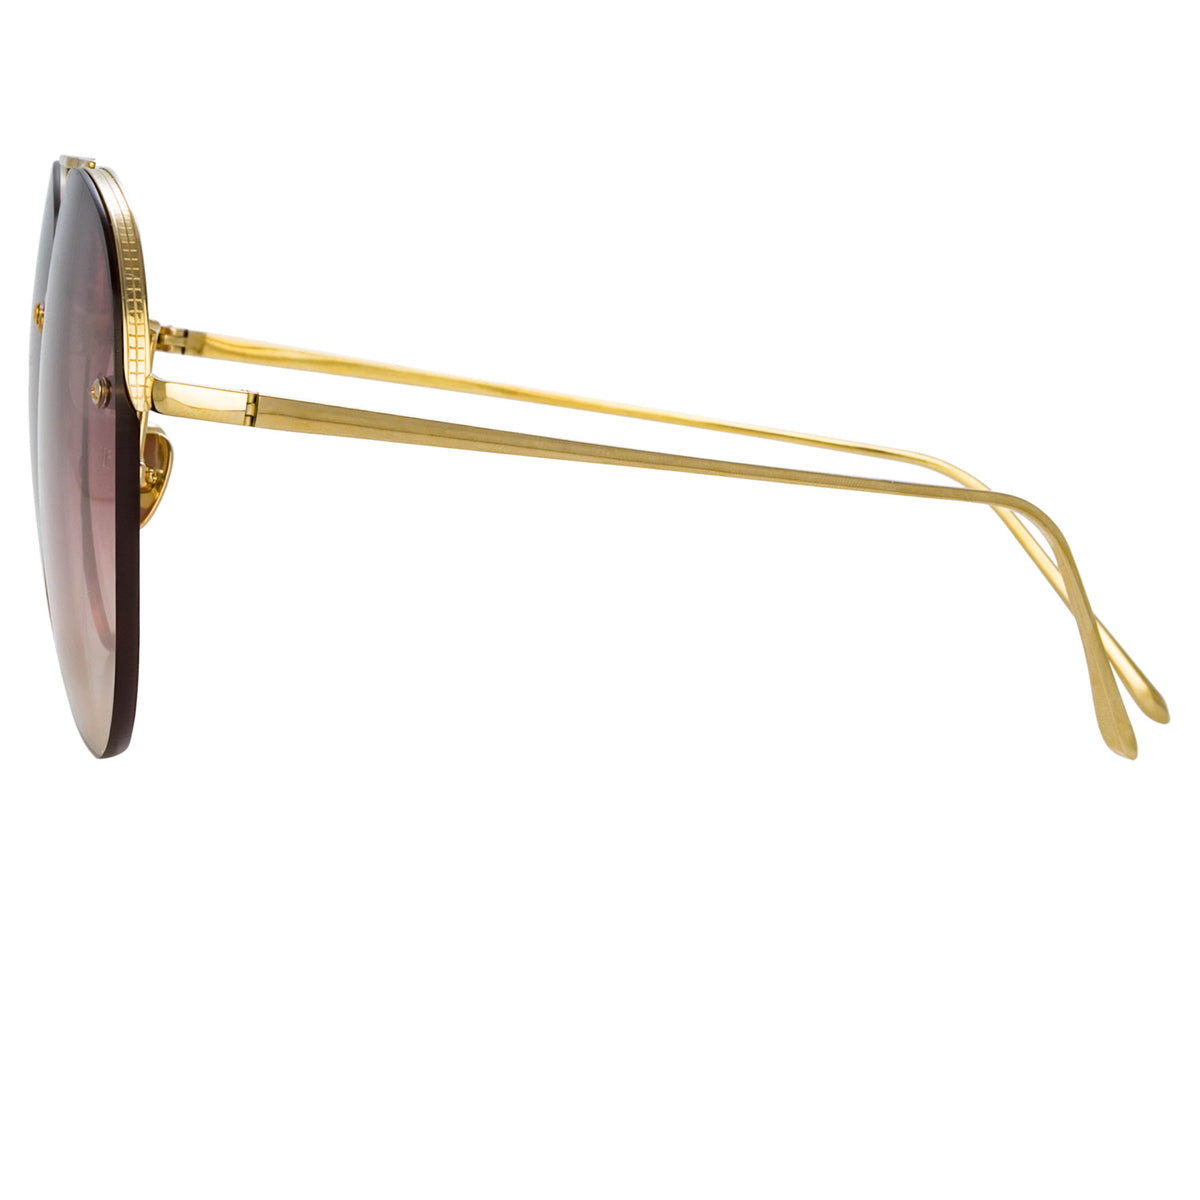 Linda Farrow - Dee Aviator Sunglasses in Yellow Gold and Grey - Unisex - Adult - LFL1096C1SUN